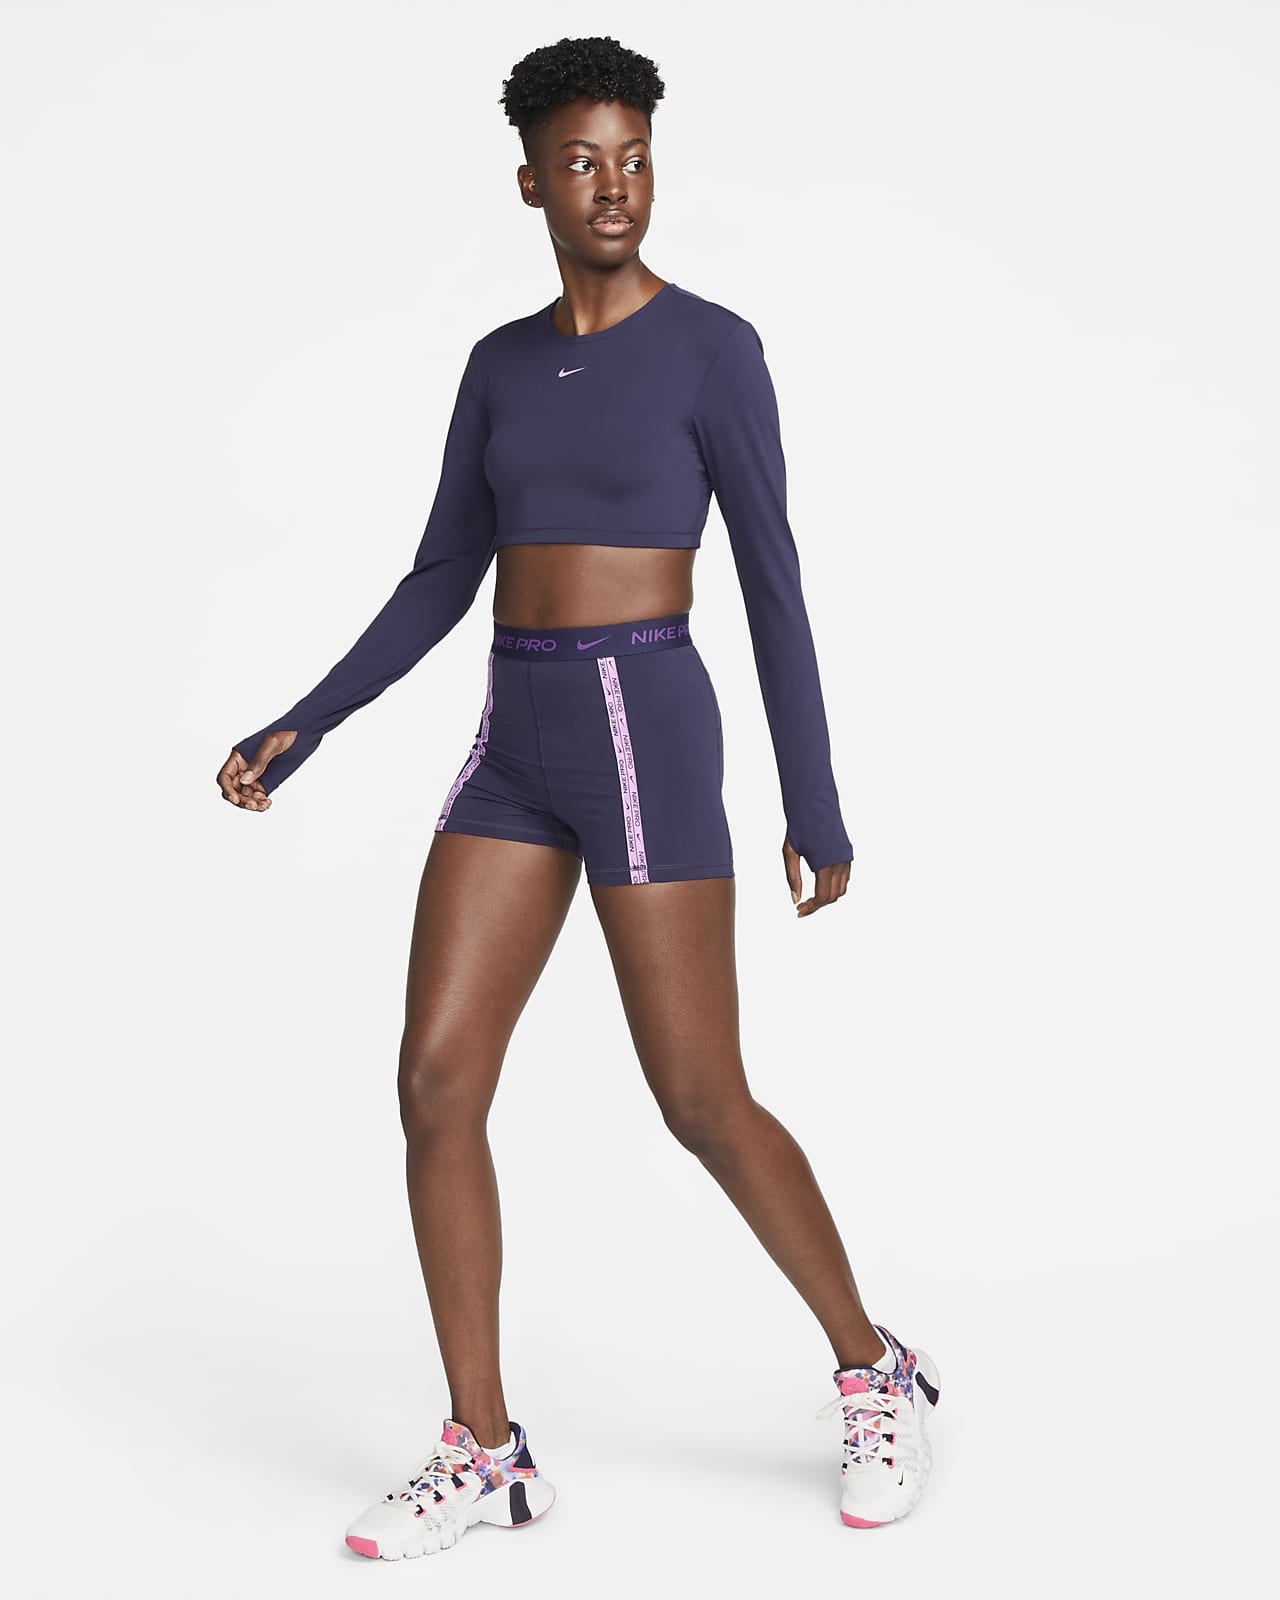 Nike Pro 365 Women's Dri-FIT Cropped Long-Sleeve Top.